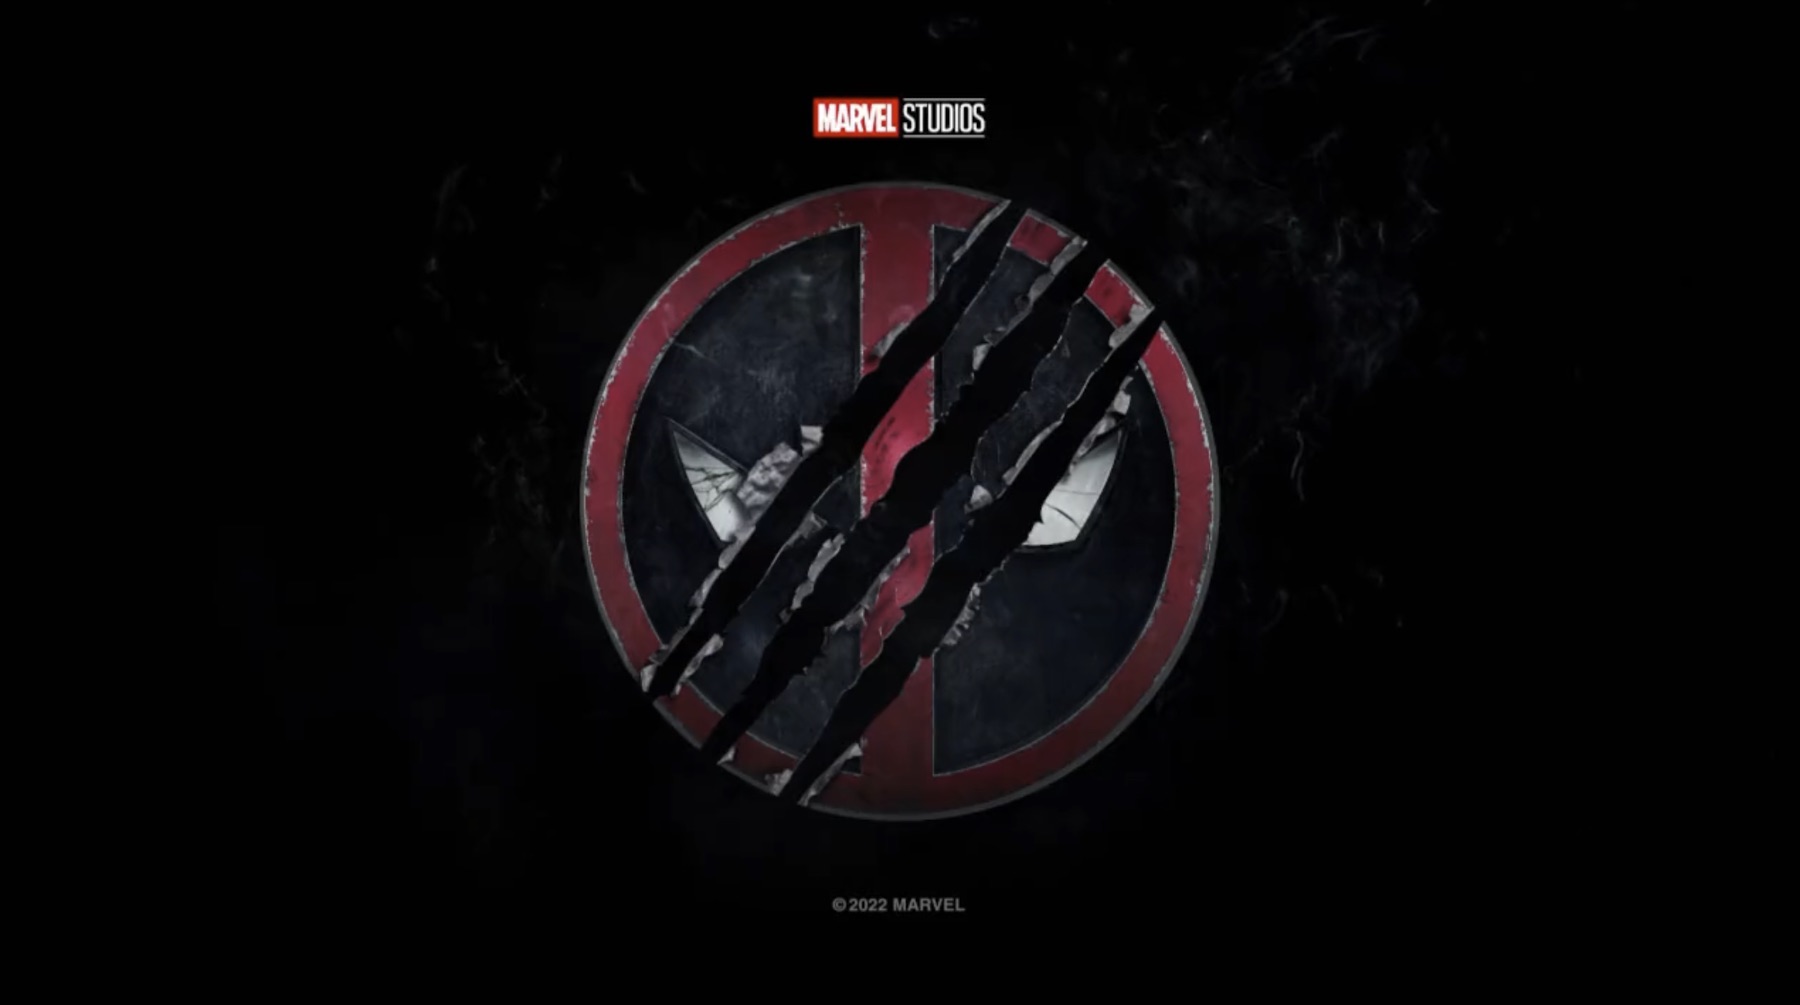 'Deadpool 3' will feature Hugh Jackman as Wolverine